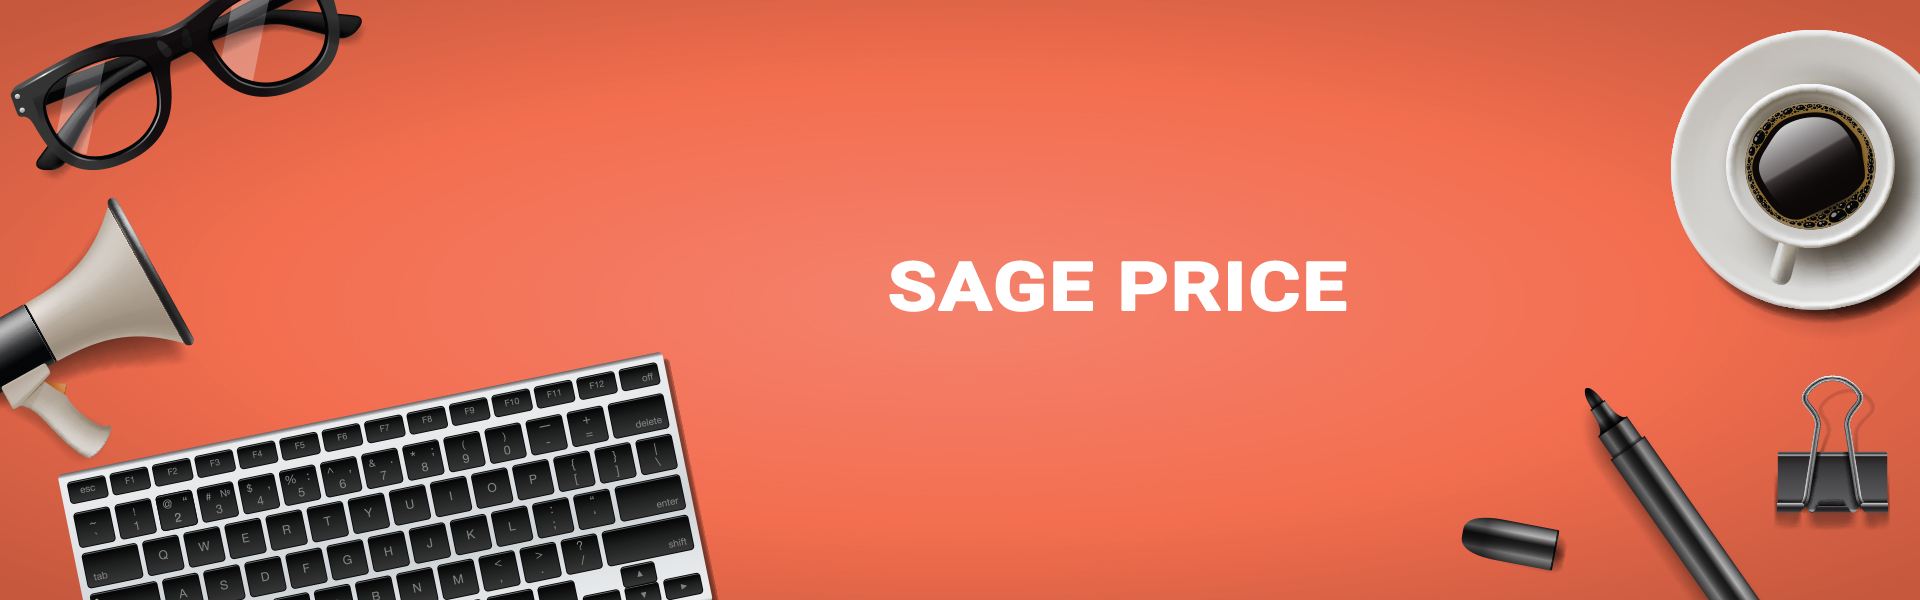 Sage Price